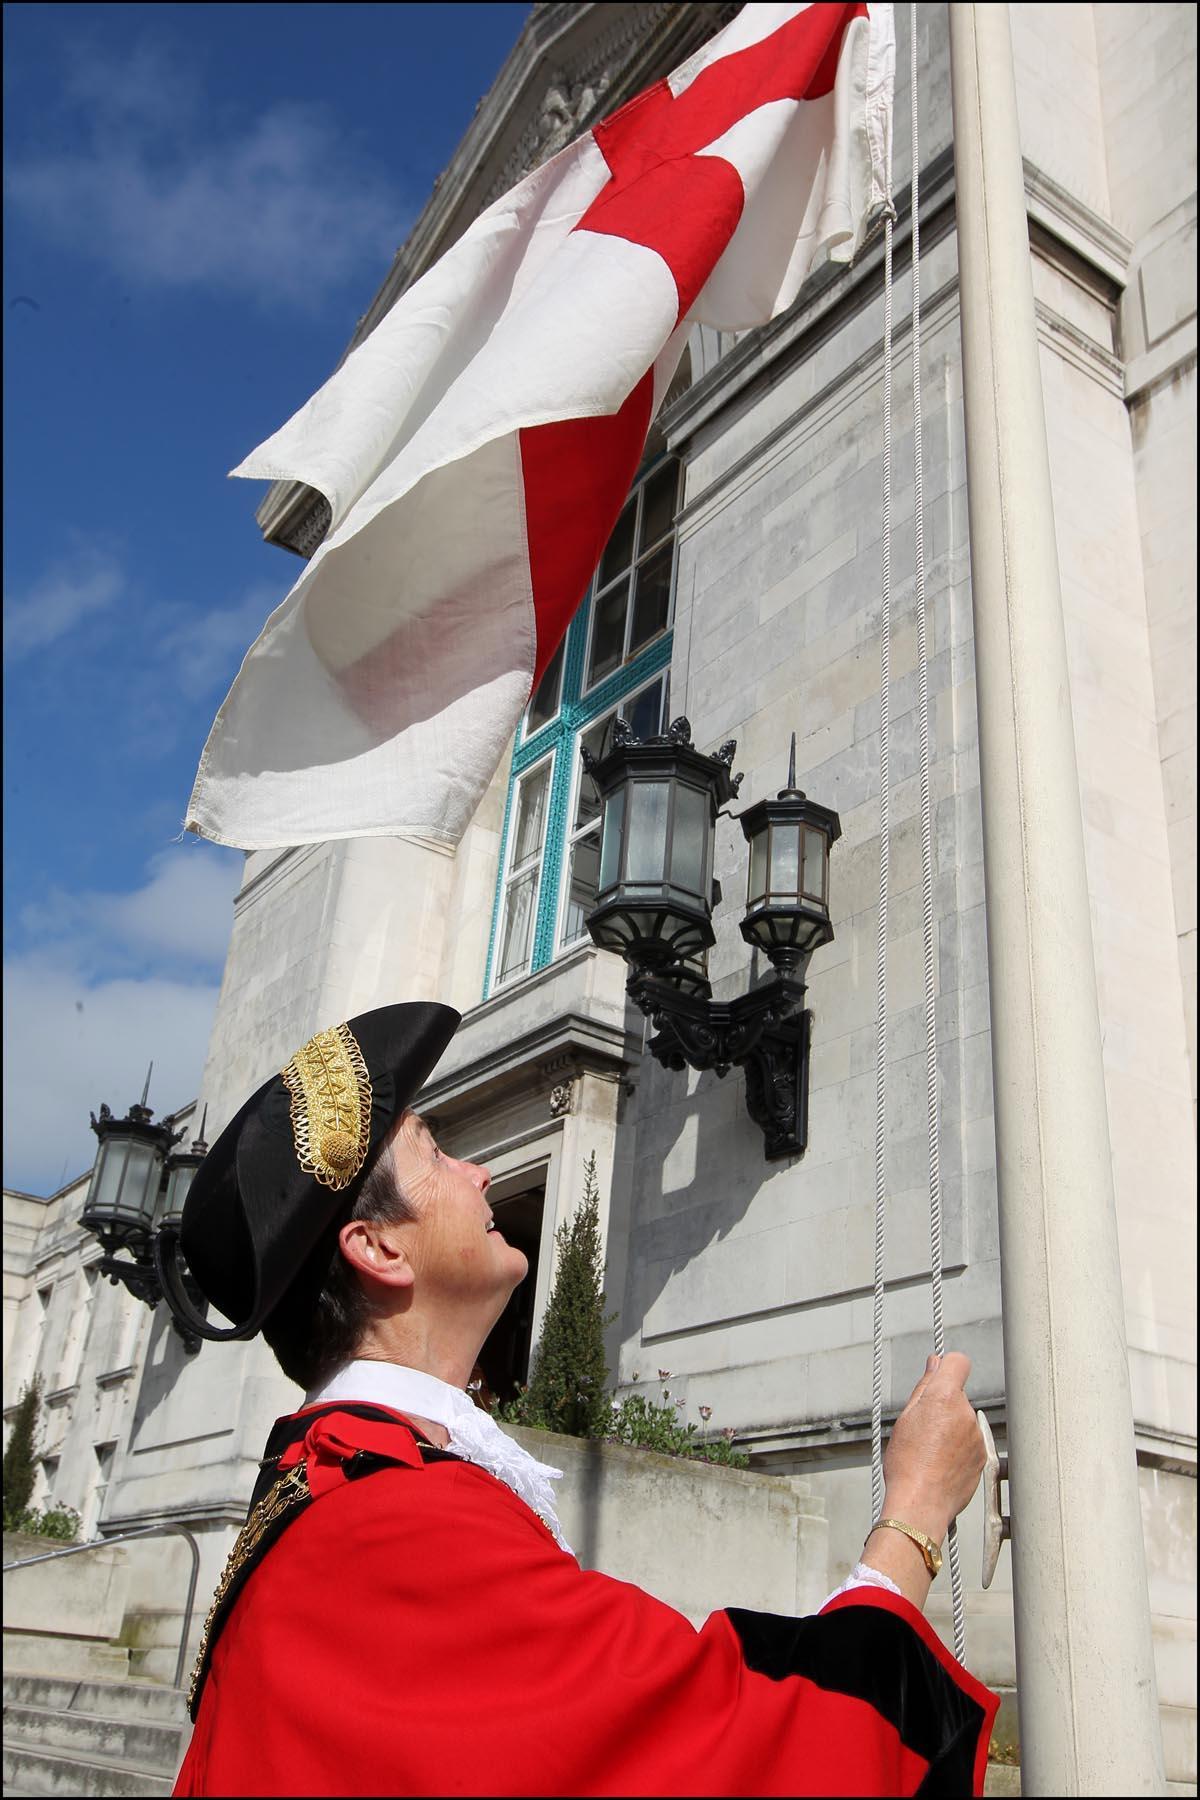 Mayor of Southampton Sue Blatchford raises the Civic Centre flag